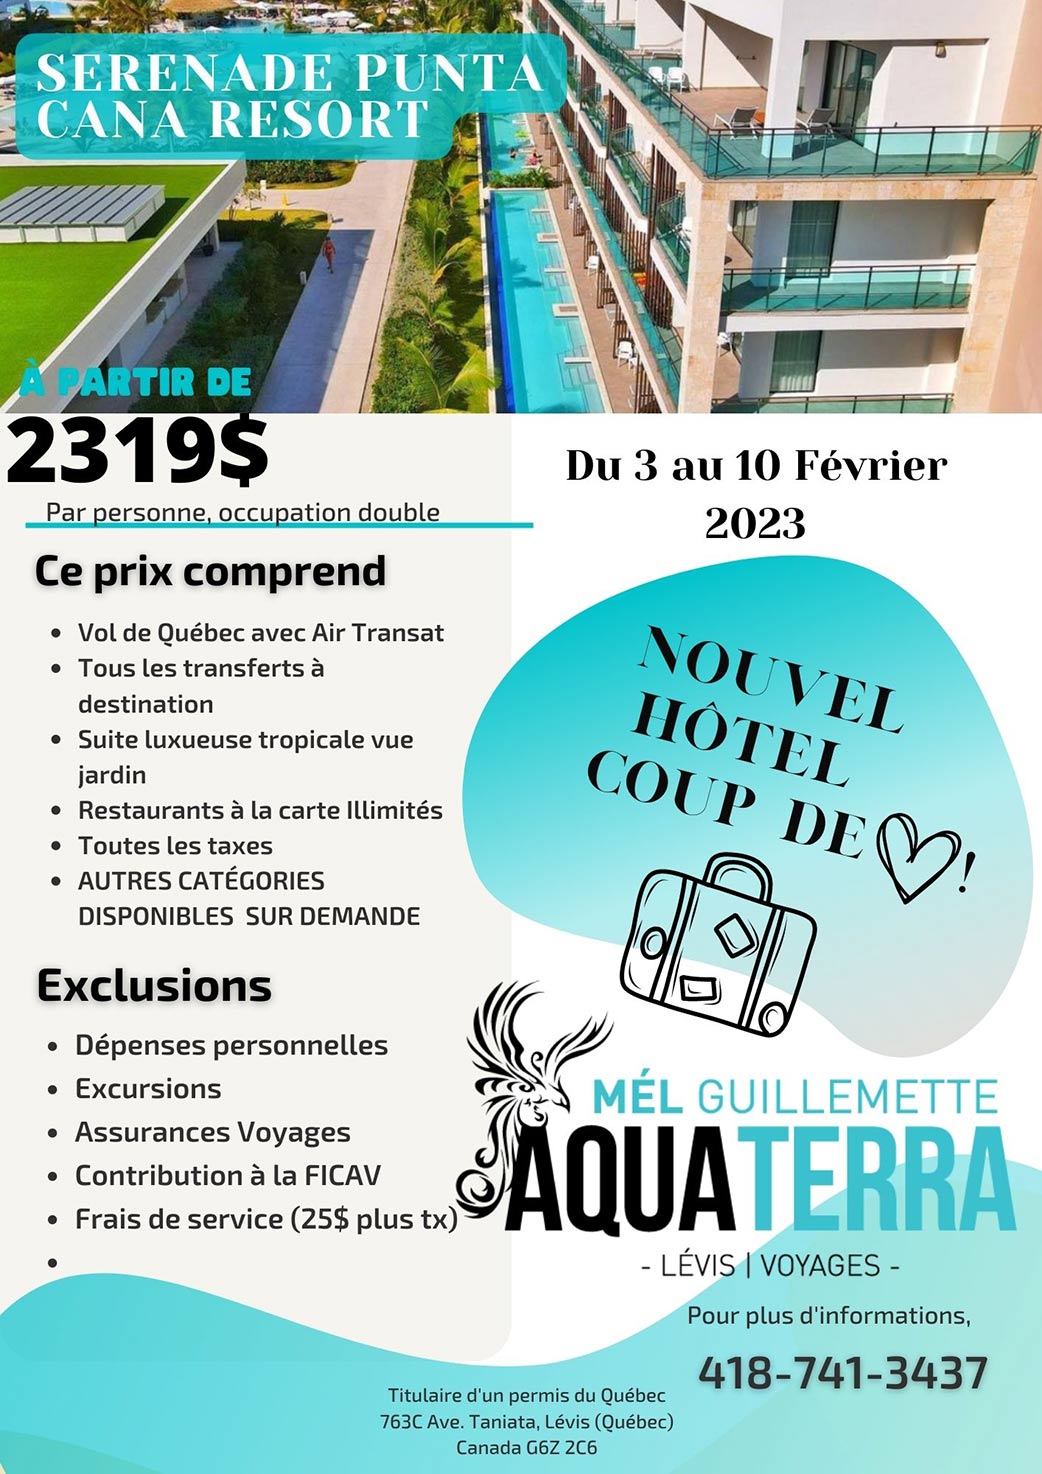 Voyage au Serenade Punta Cana Resort du 3 au 10 février 2023